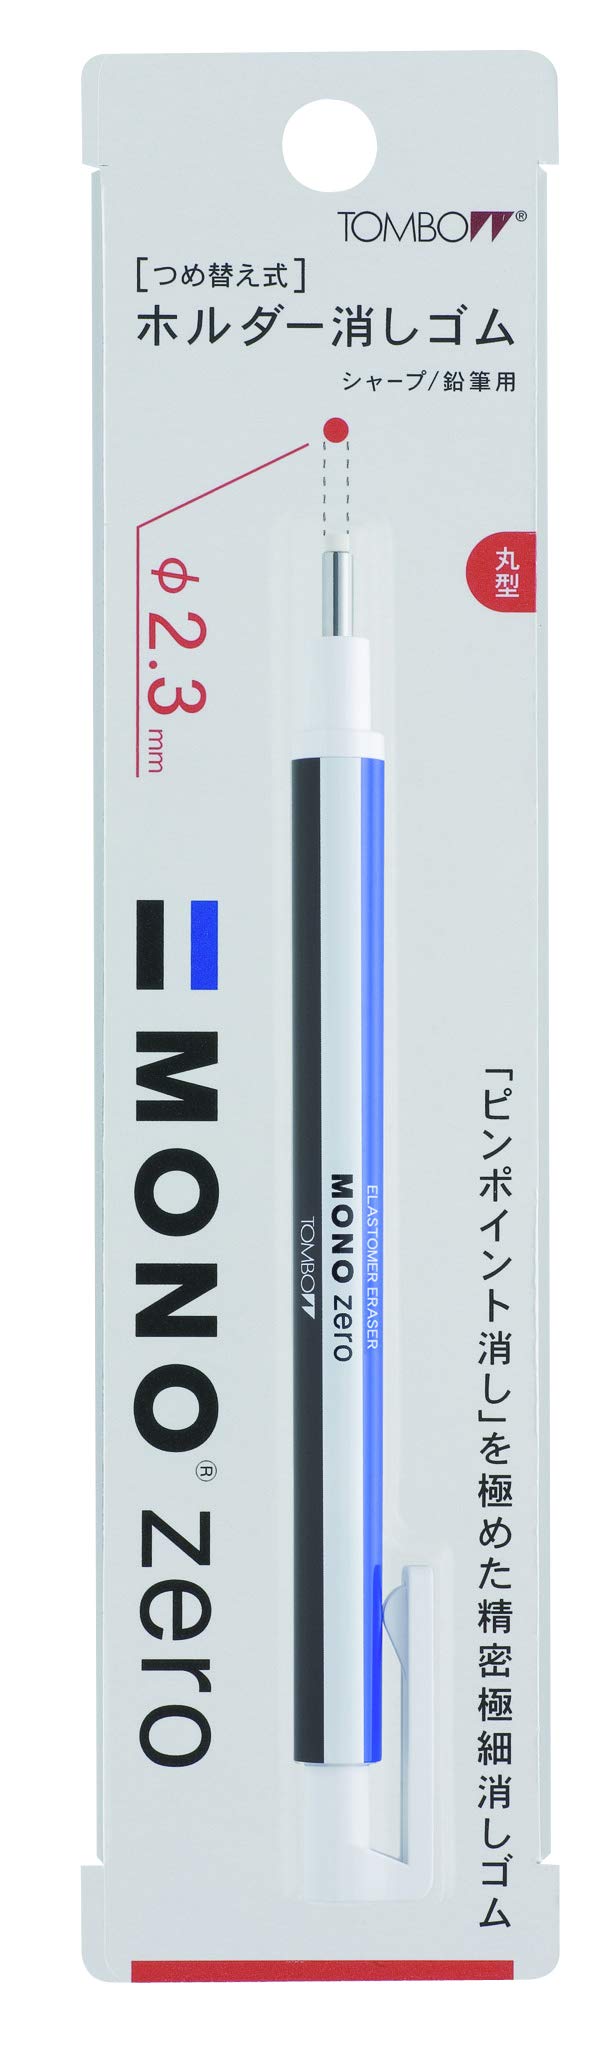 Tombow Holder Eraser, Mono Zero Round Shaper, Original (EH-KUR)